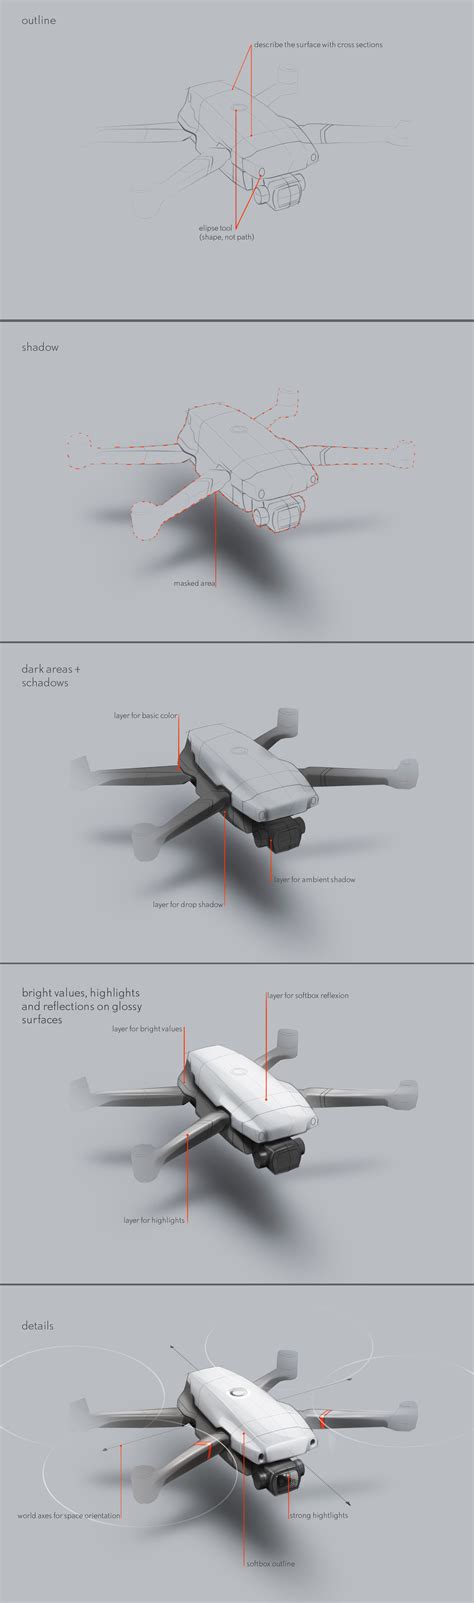 rendering tutorial drone  andreas grasmueck  coroflotcom